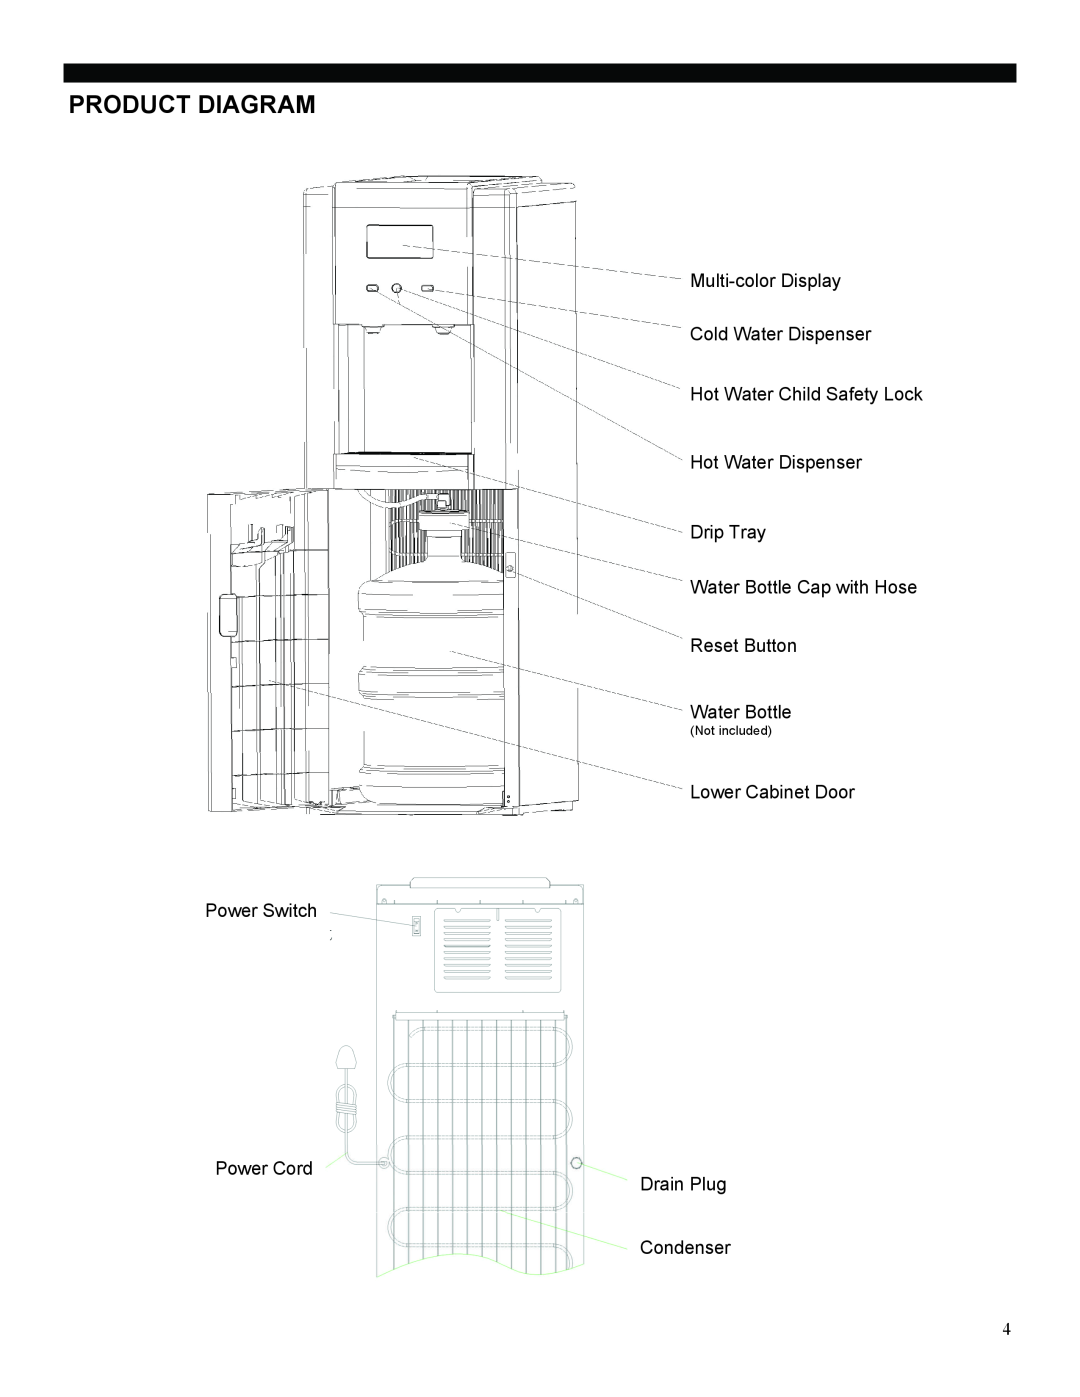 Soleus Air WA2-02-50A manual Product Diagram, Multi-colorDisplay Cold Water Dispenser, Water Bottle, Drain Plug Condenser 